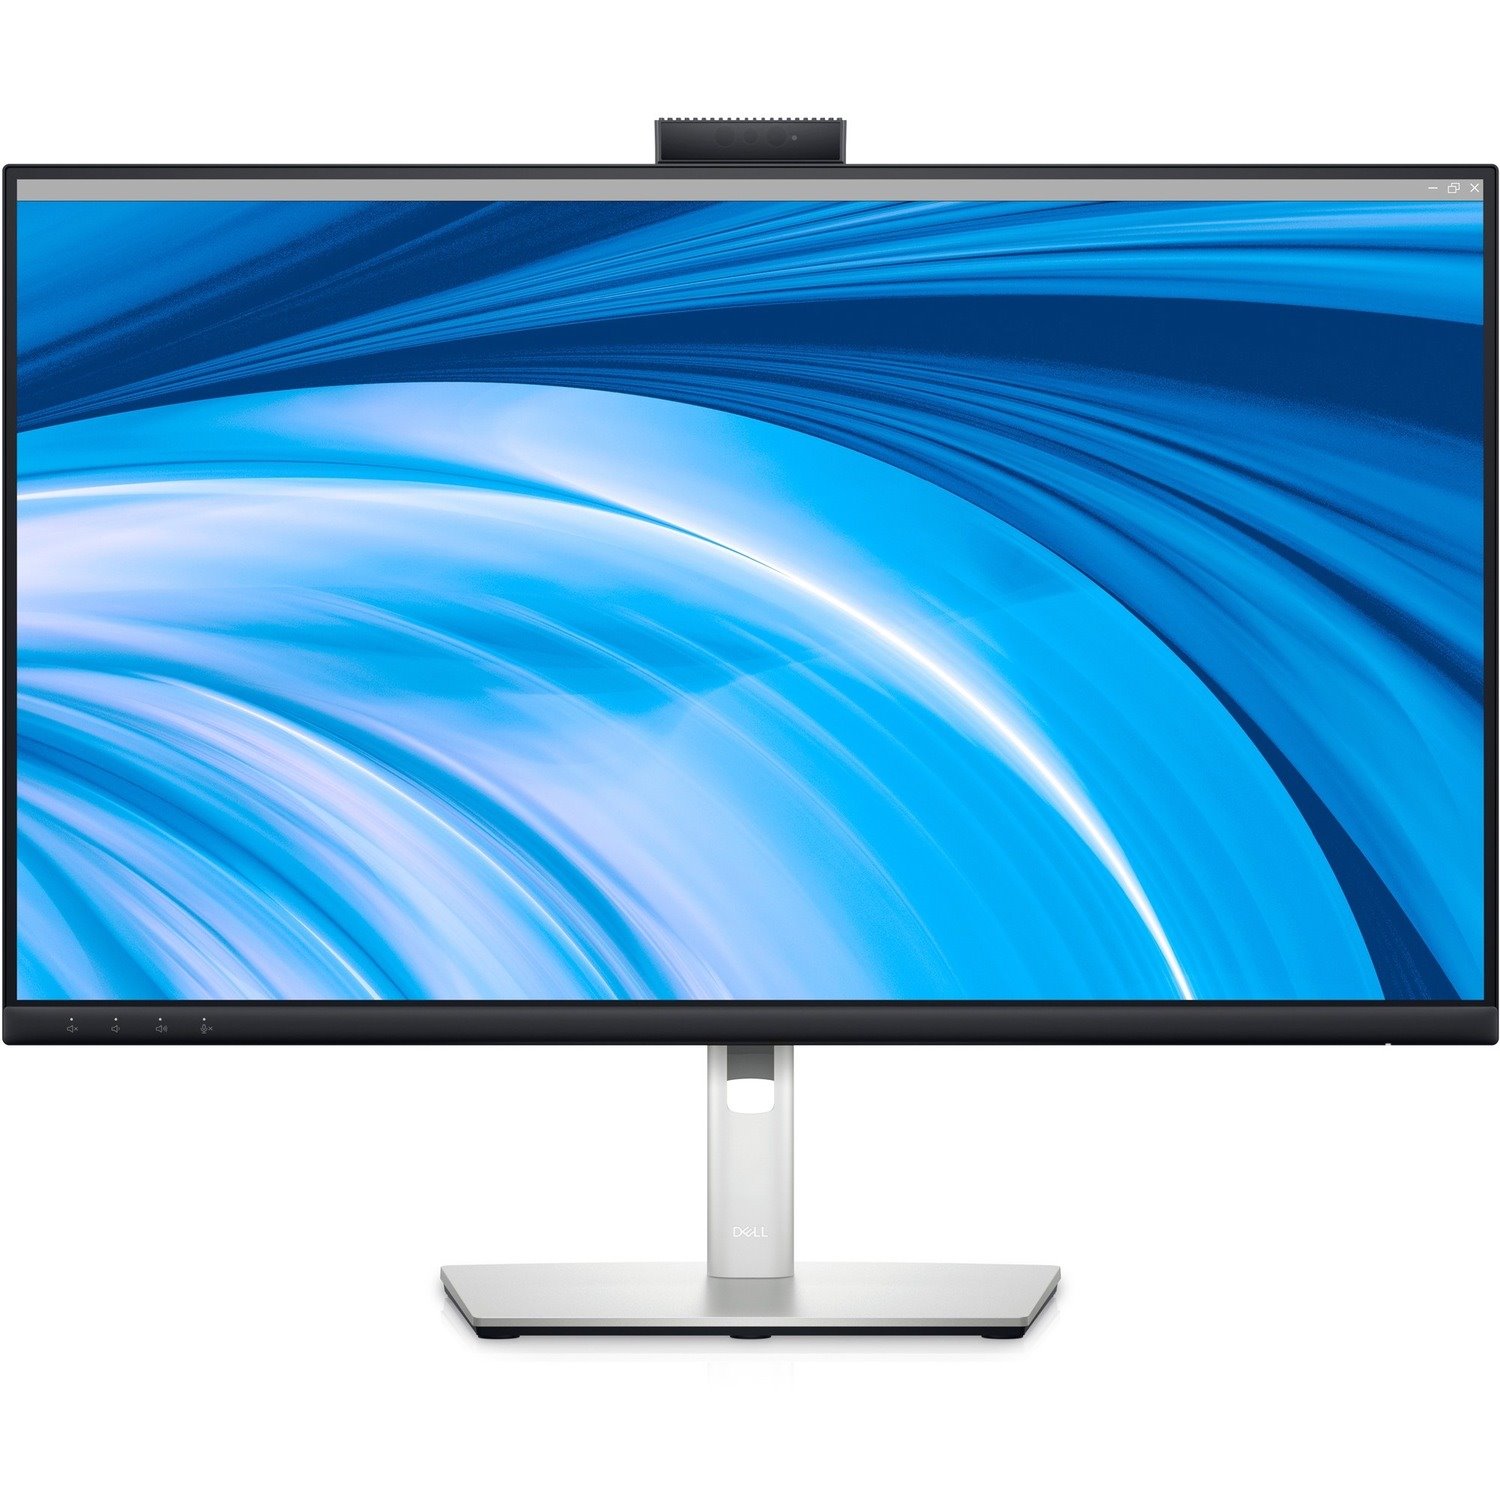 Dell C2723H 27" Webcam Full HD LED LCD Monitor - 16:9